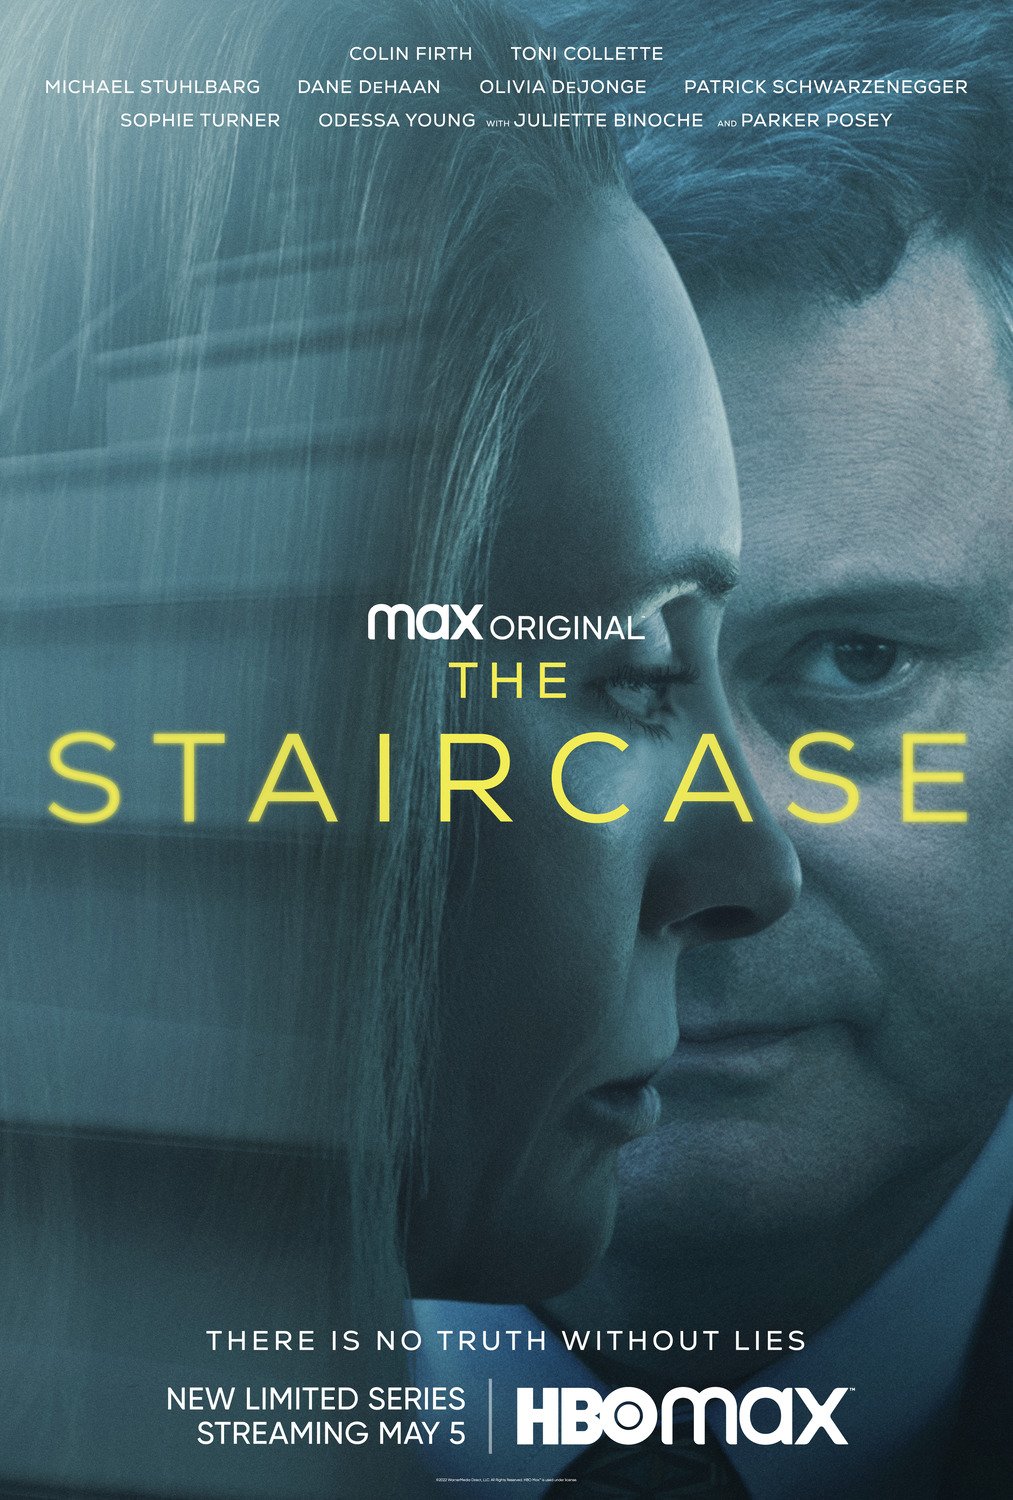 Minisérie A escada (The Staircase) da HBO Max é boa? I Baseada em